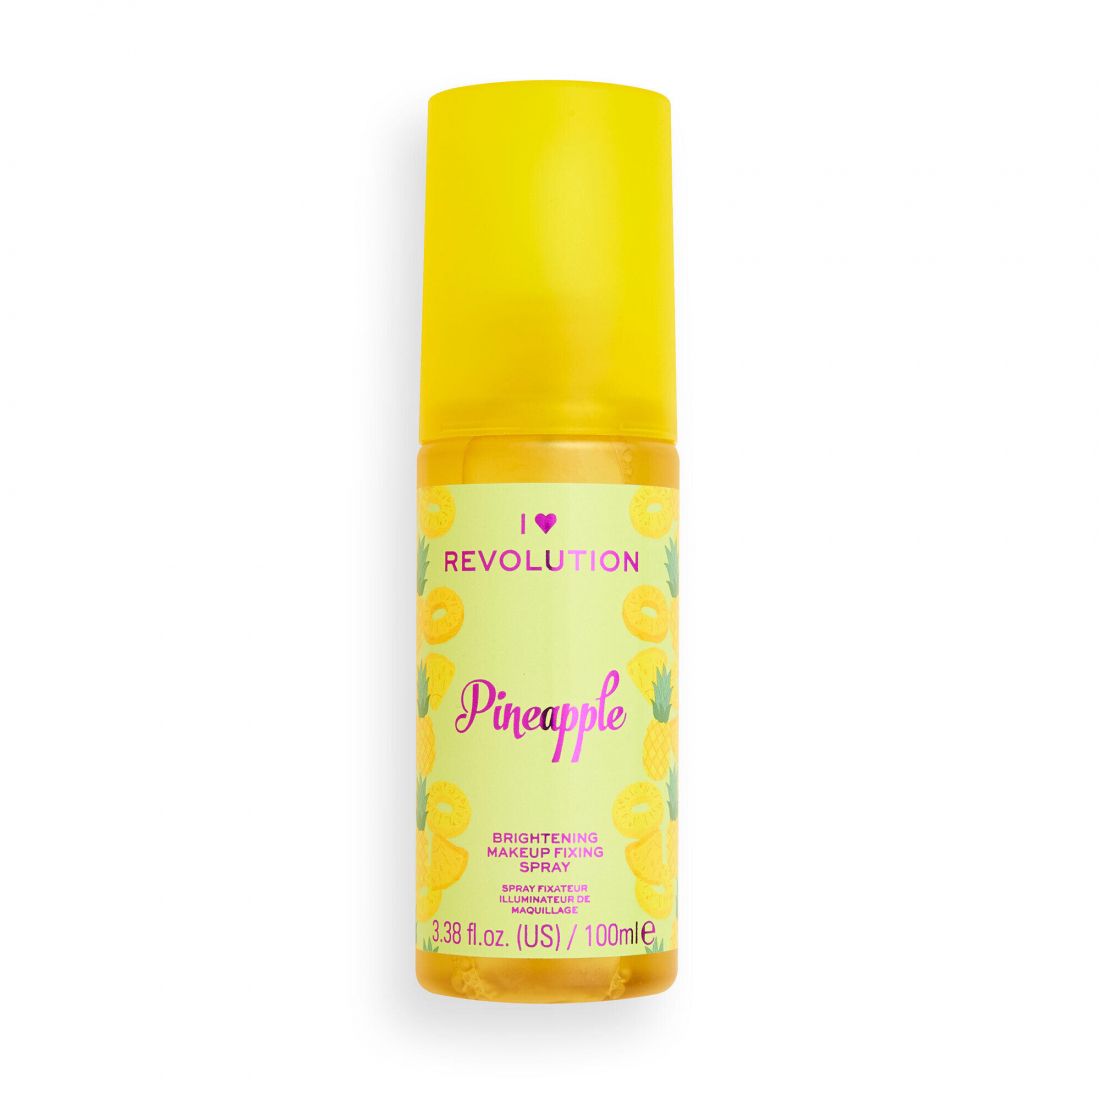 'Brightening' Make-up Fixing Spray - Pineapple 100 ml